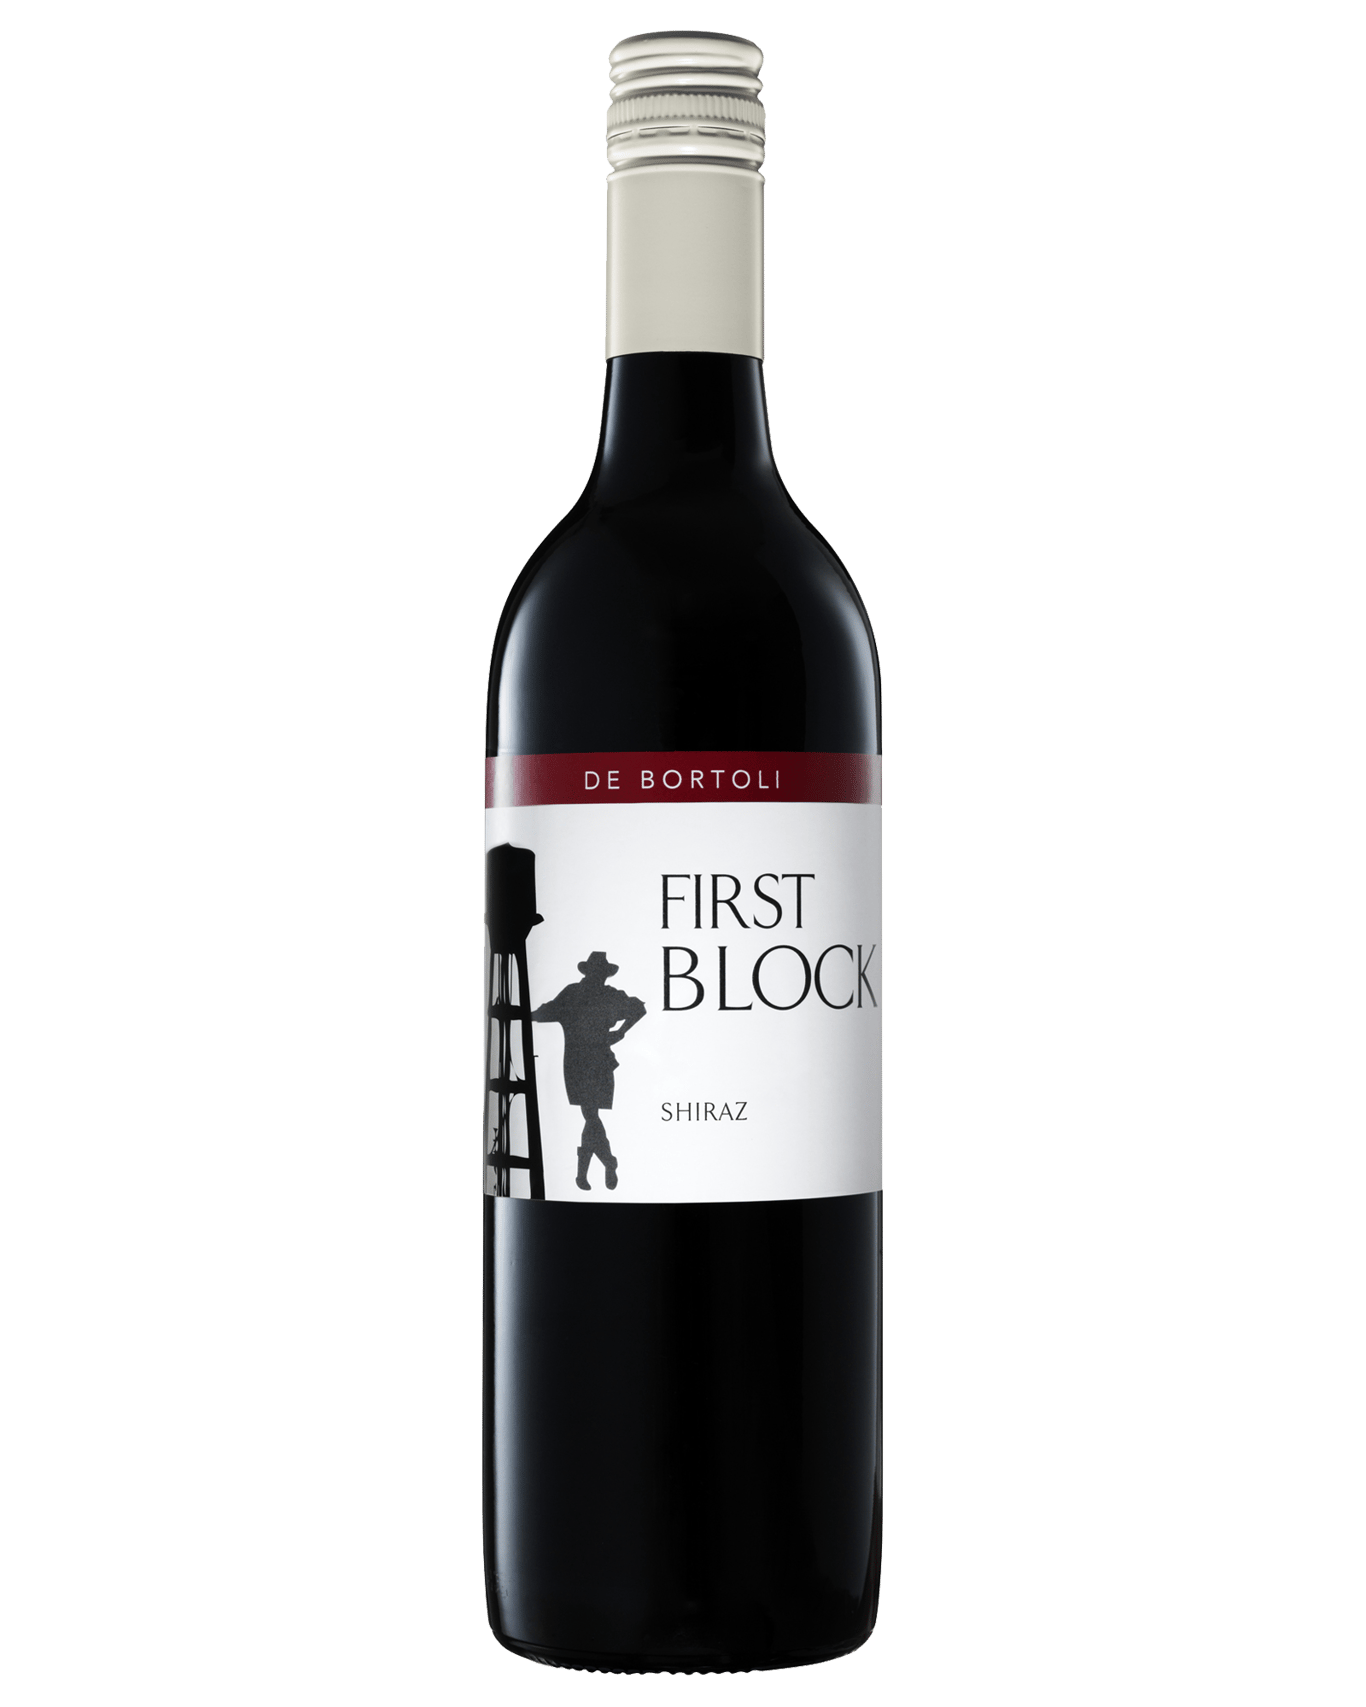 De Bortoli First Block Shiraz Red Wine 750mL bottle | eBay